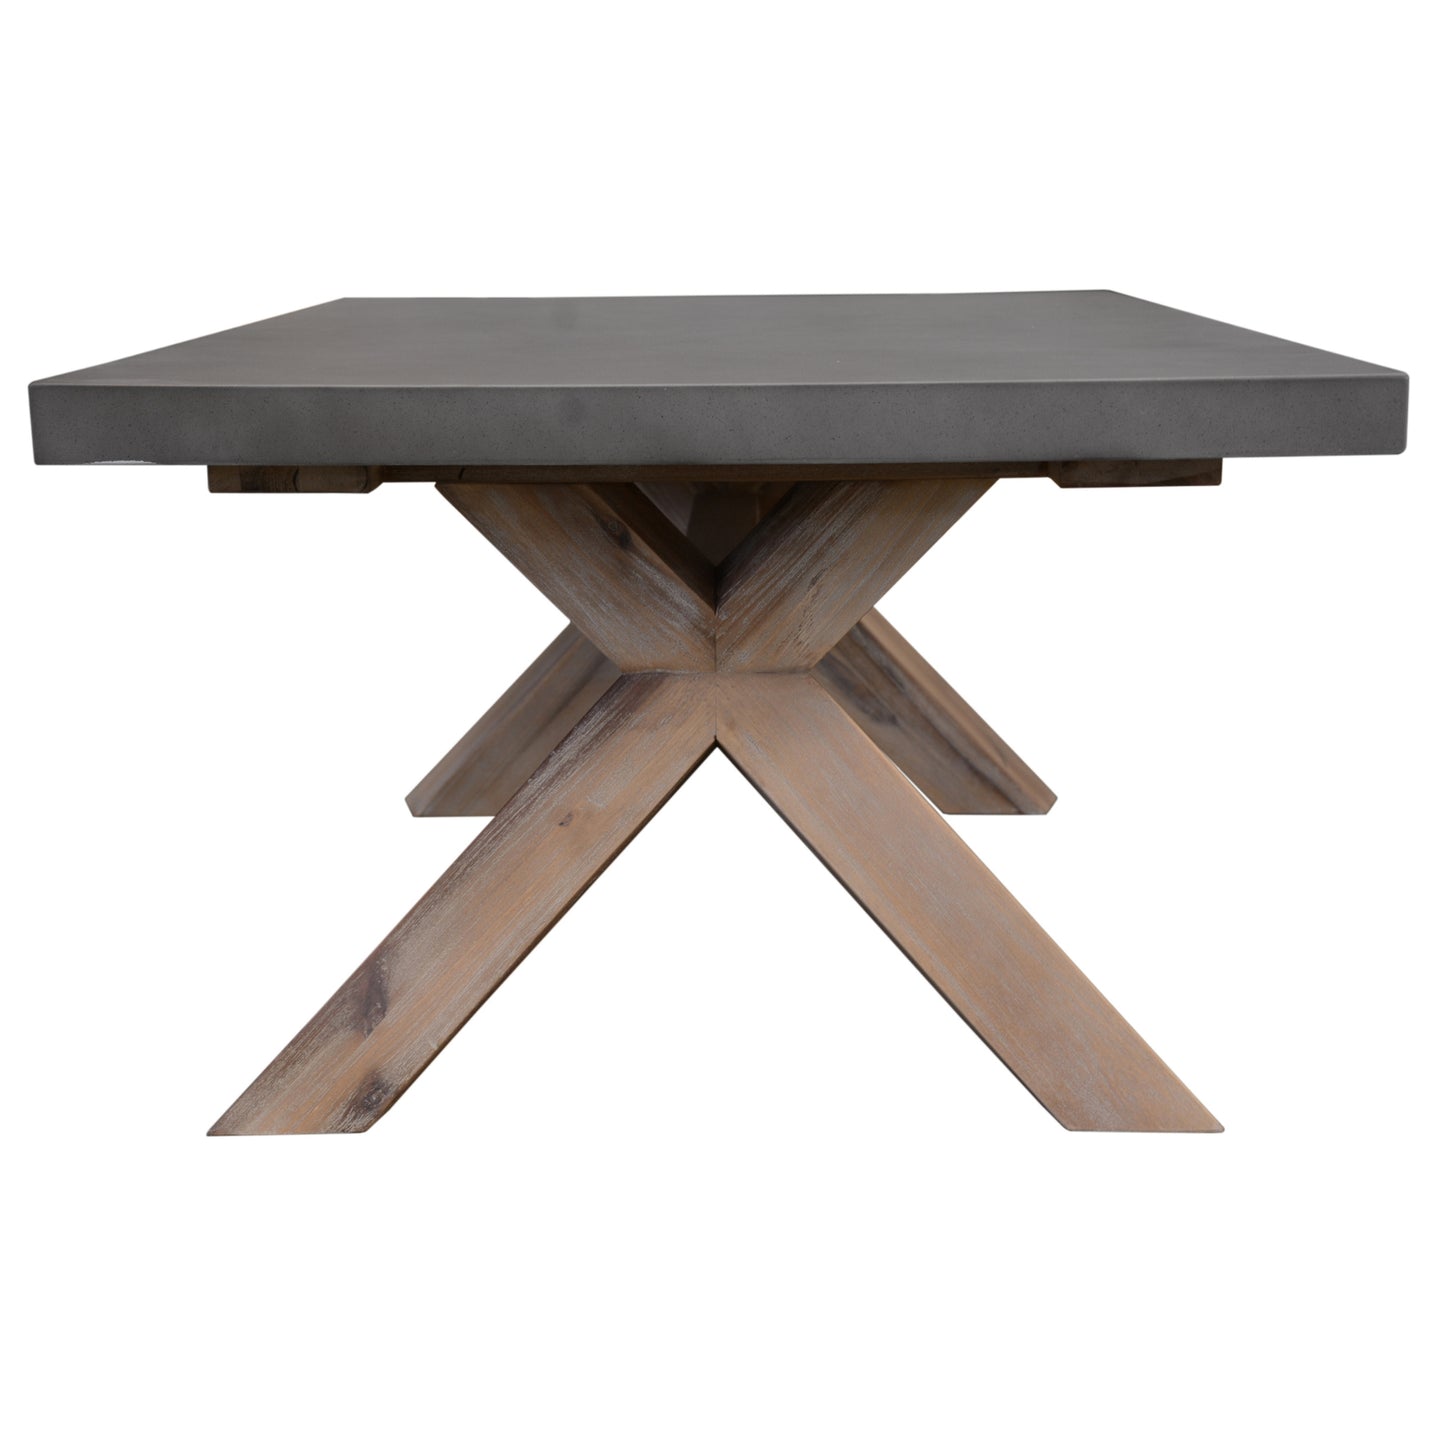 Stony 120cm Coffee Table with Concrete Top - Grey